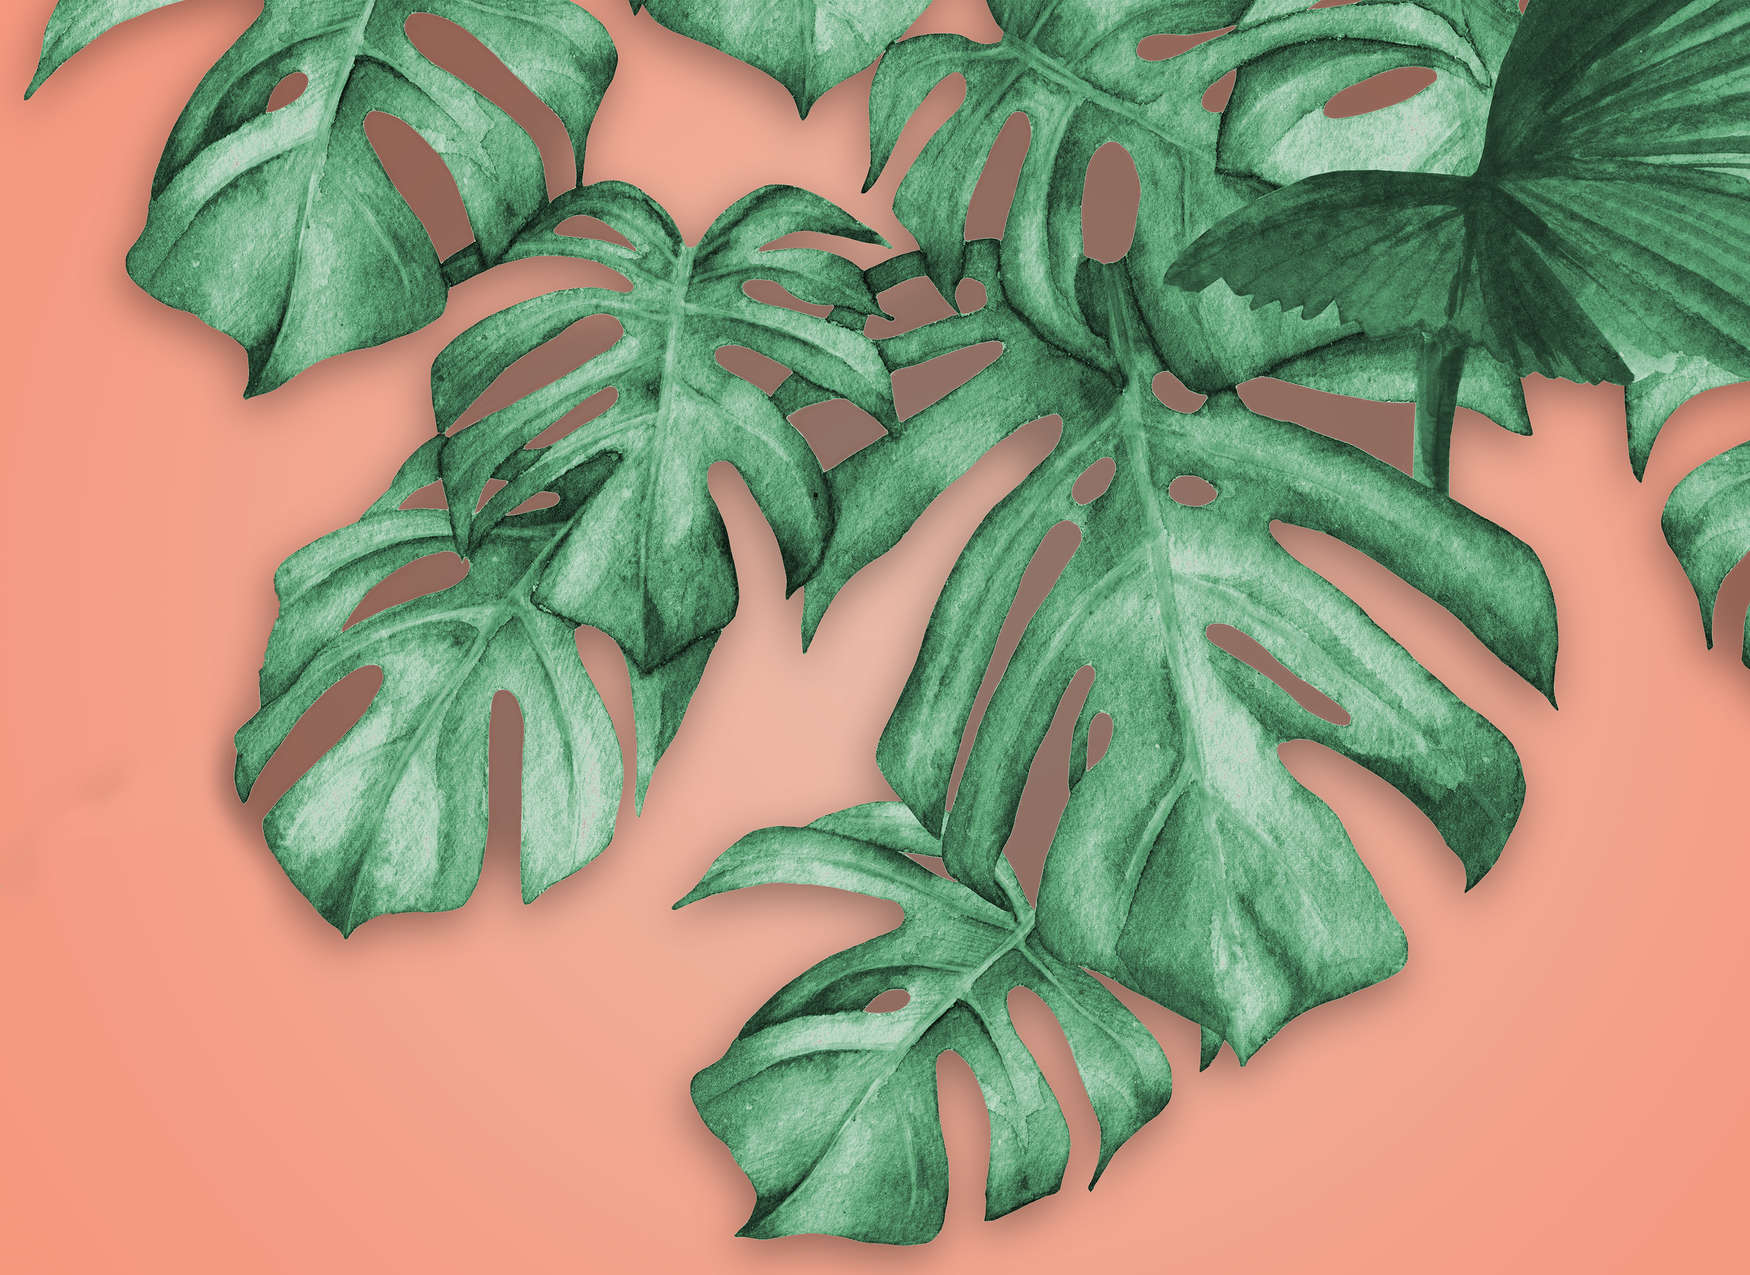             Tropical Palm Leaves Wallpaper - Green, Orange
        